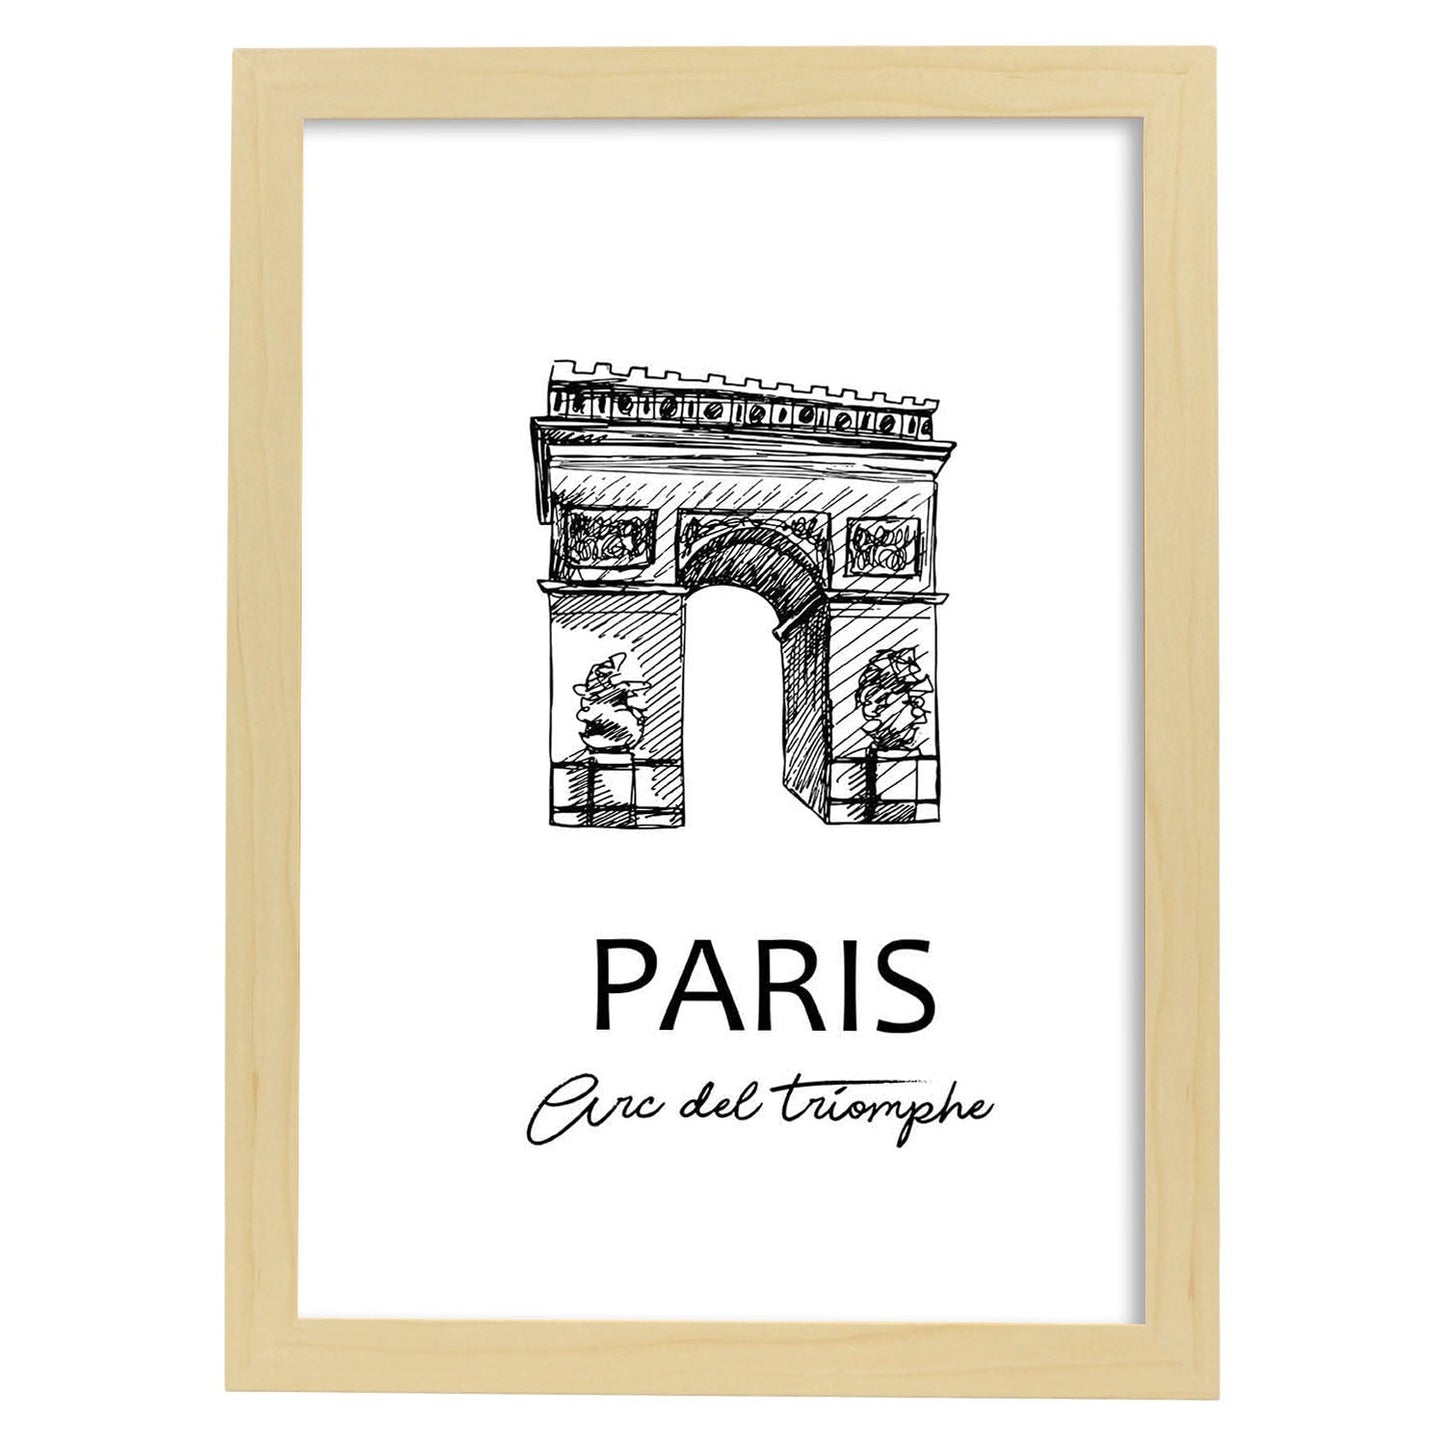 Poster de Paris -Arco del triunfo. Láminas con monumentos de ciudades.-Artwork-Nacnic-A3-Marco Madera clara-Nacnic Estudio SL